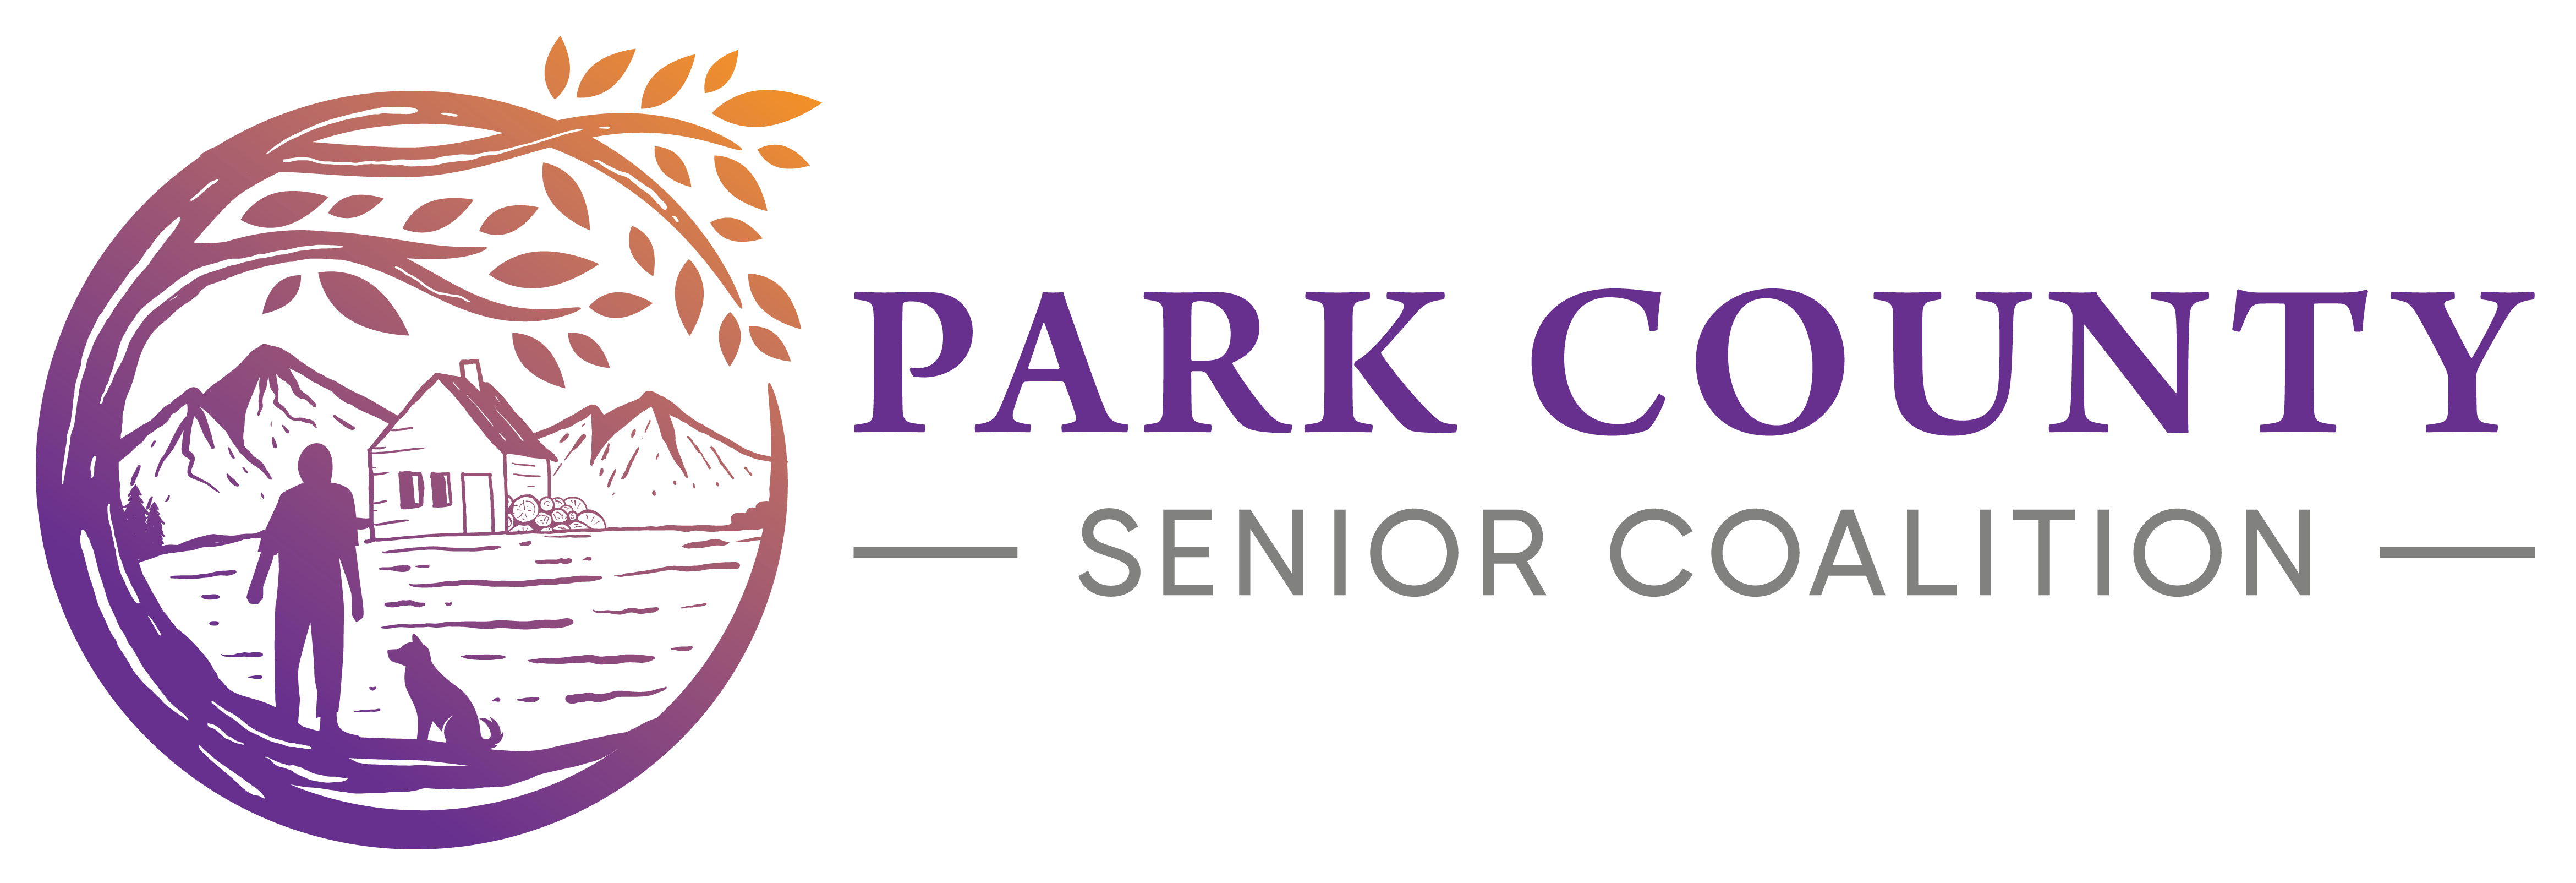 Park County Senior Coalition